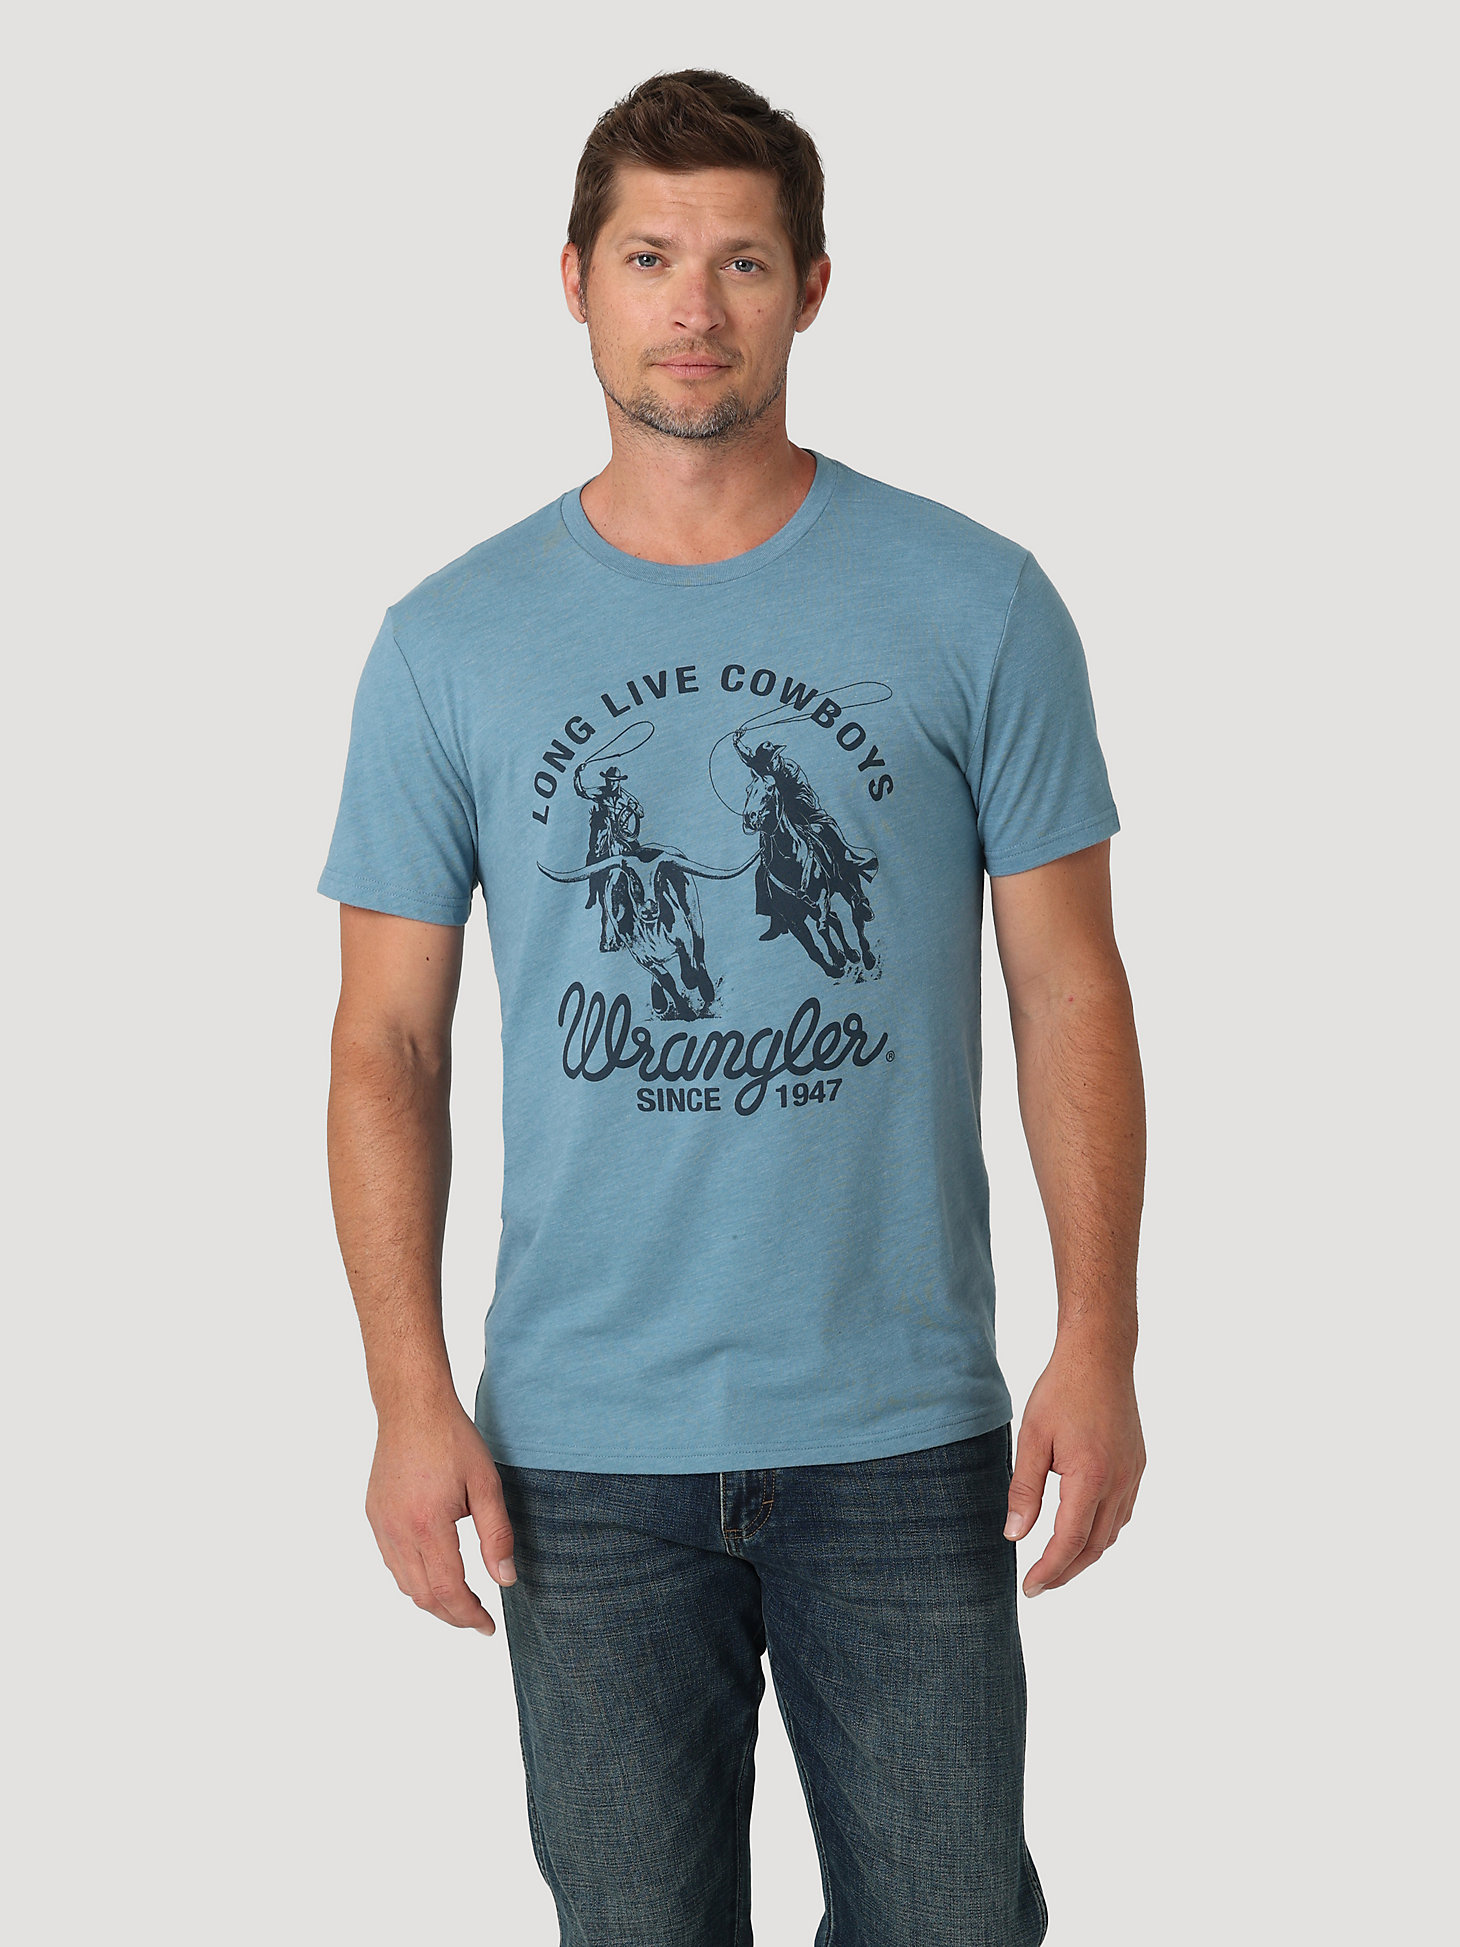 Men's Long Live Cowboys Graphic T-Shirt in Medium Blue main view